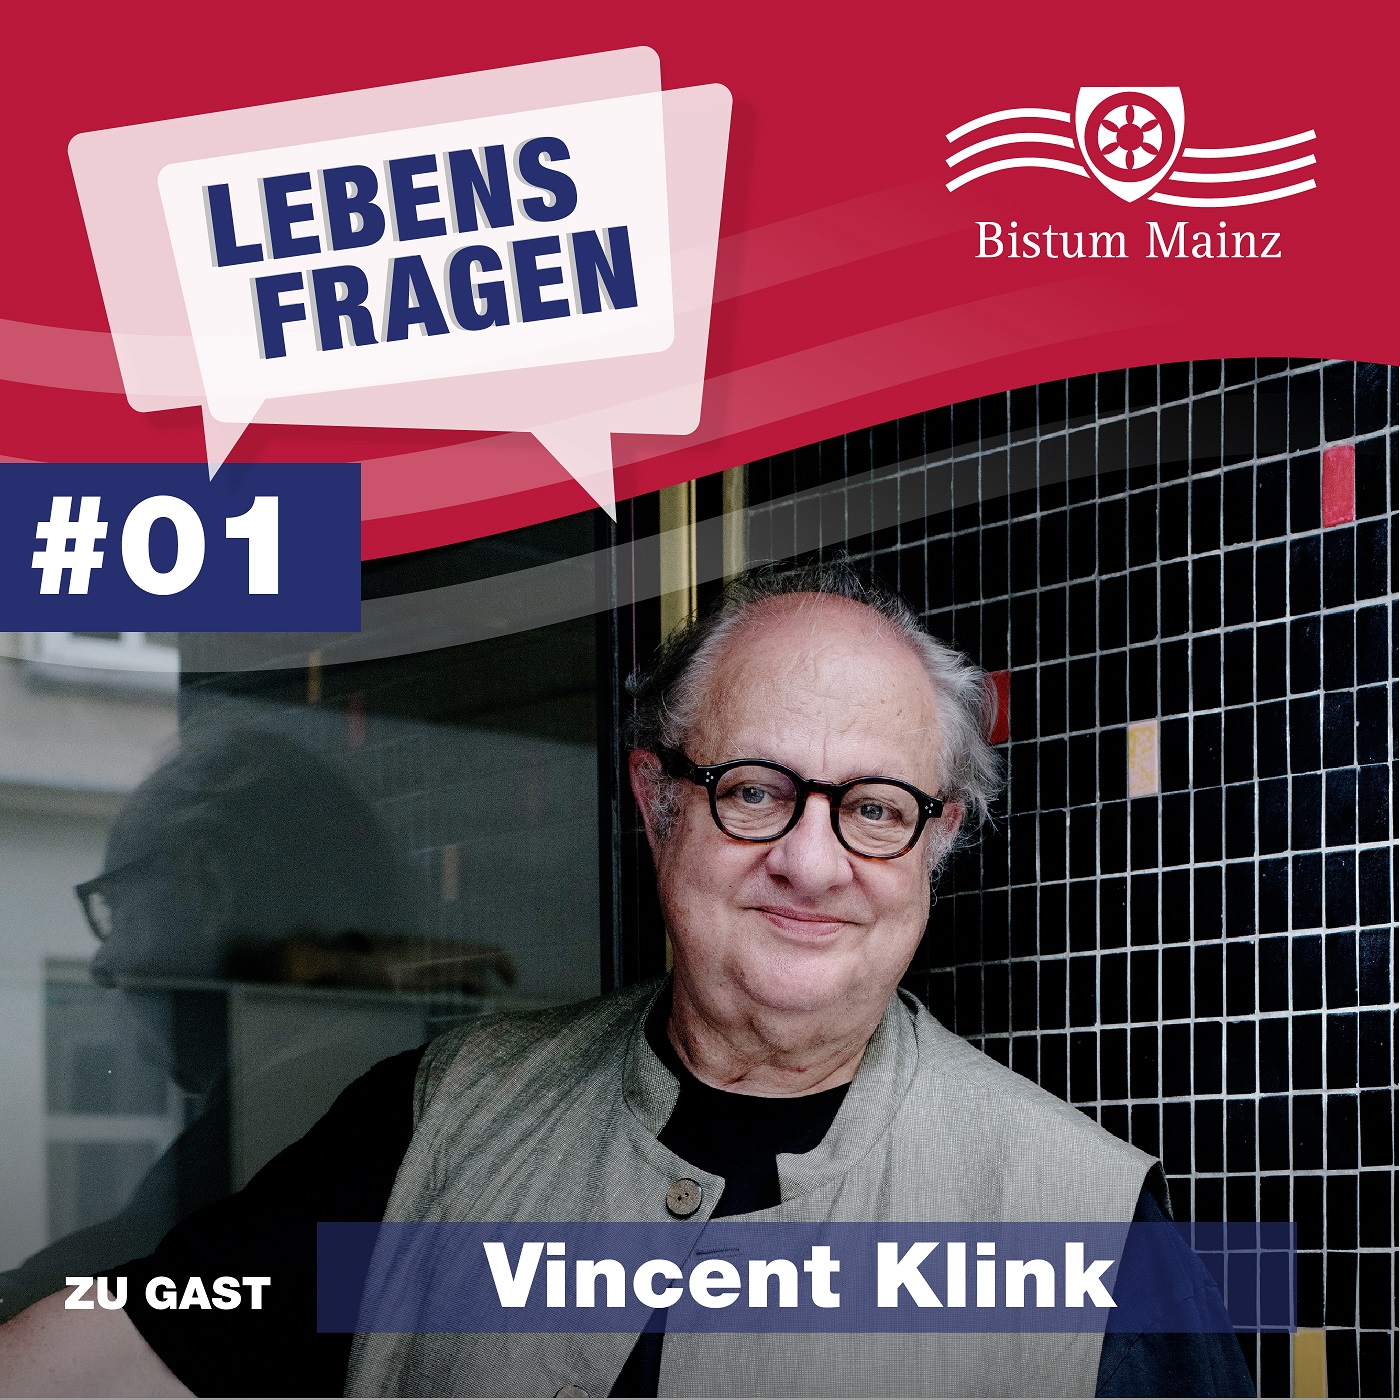 Vincent Klink (c) Bistum Mainz